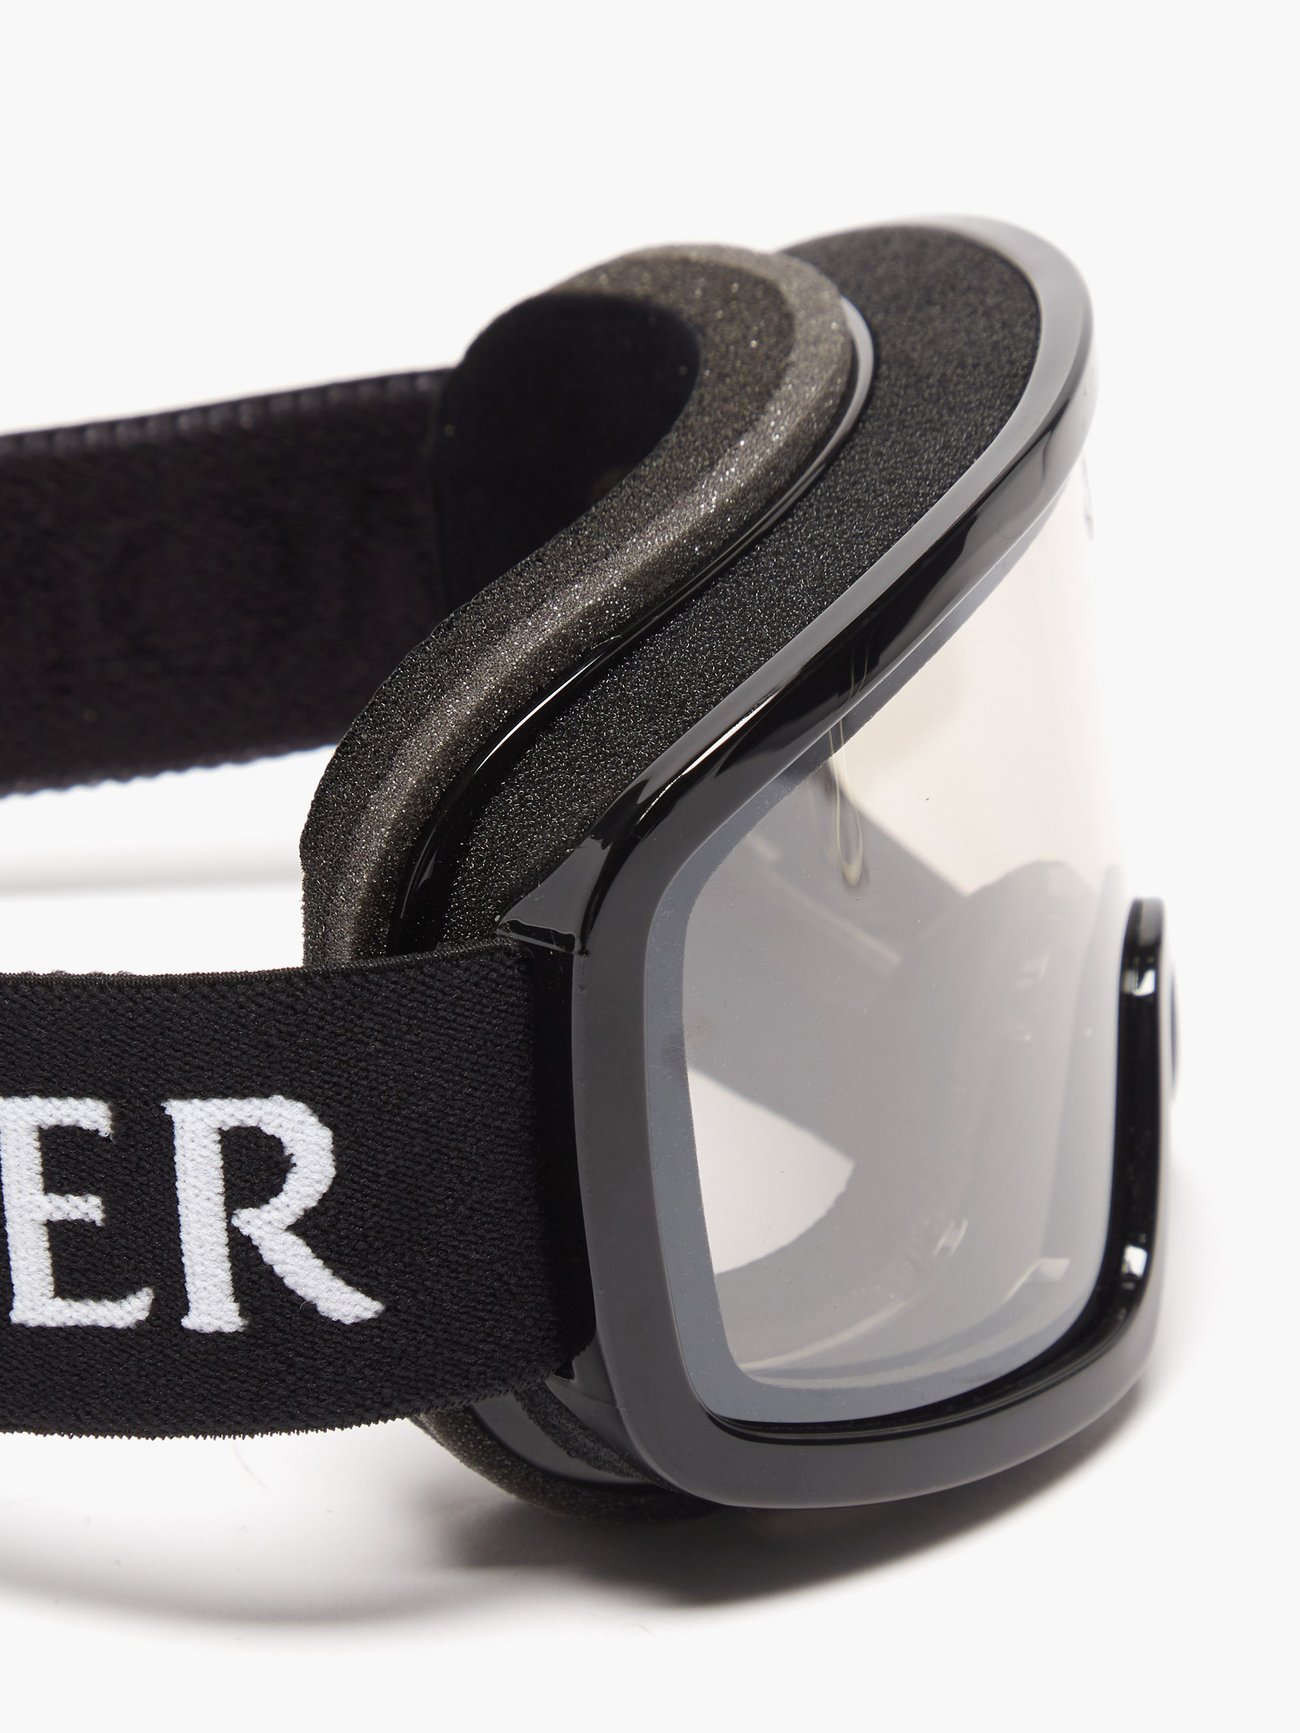 Black Terrabeam shield-lens ski goggles, Moncler